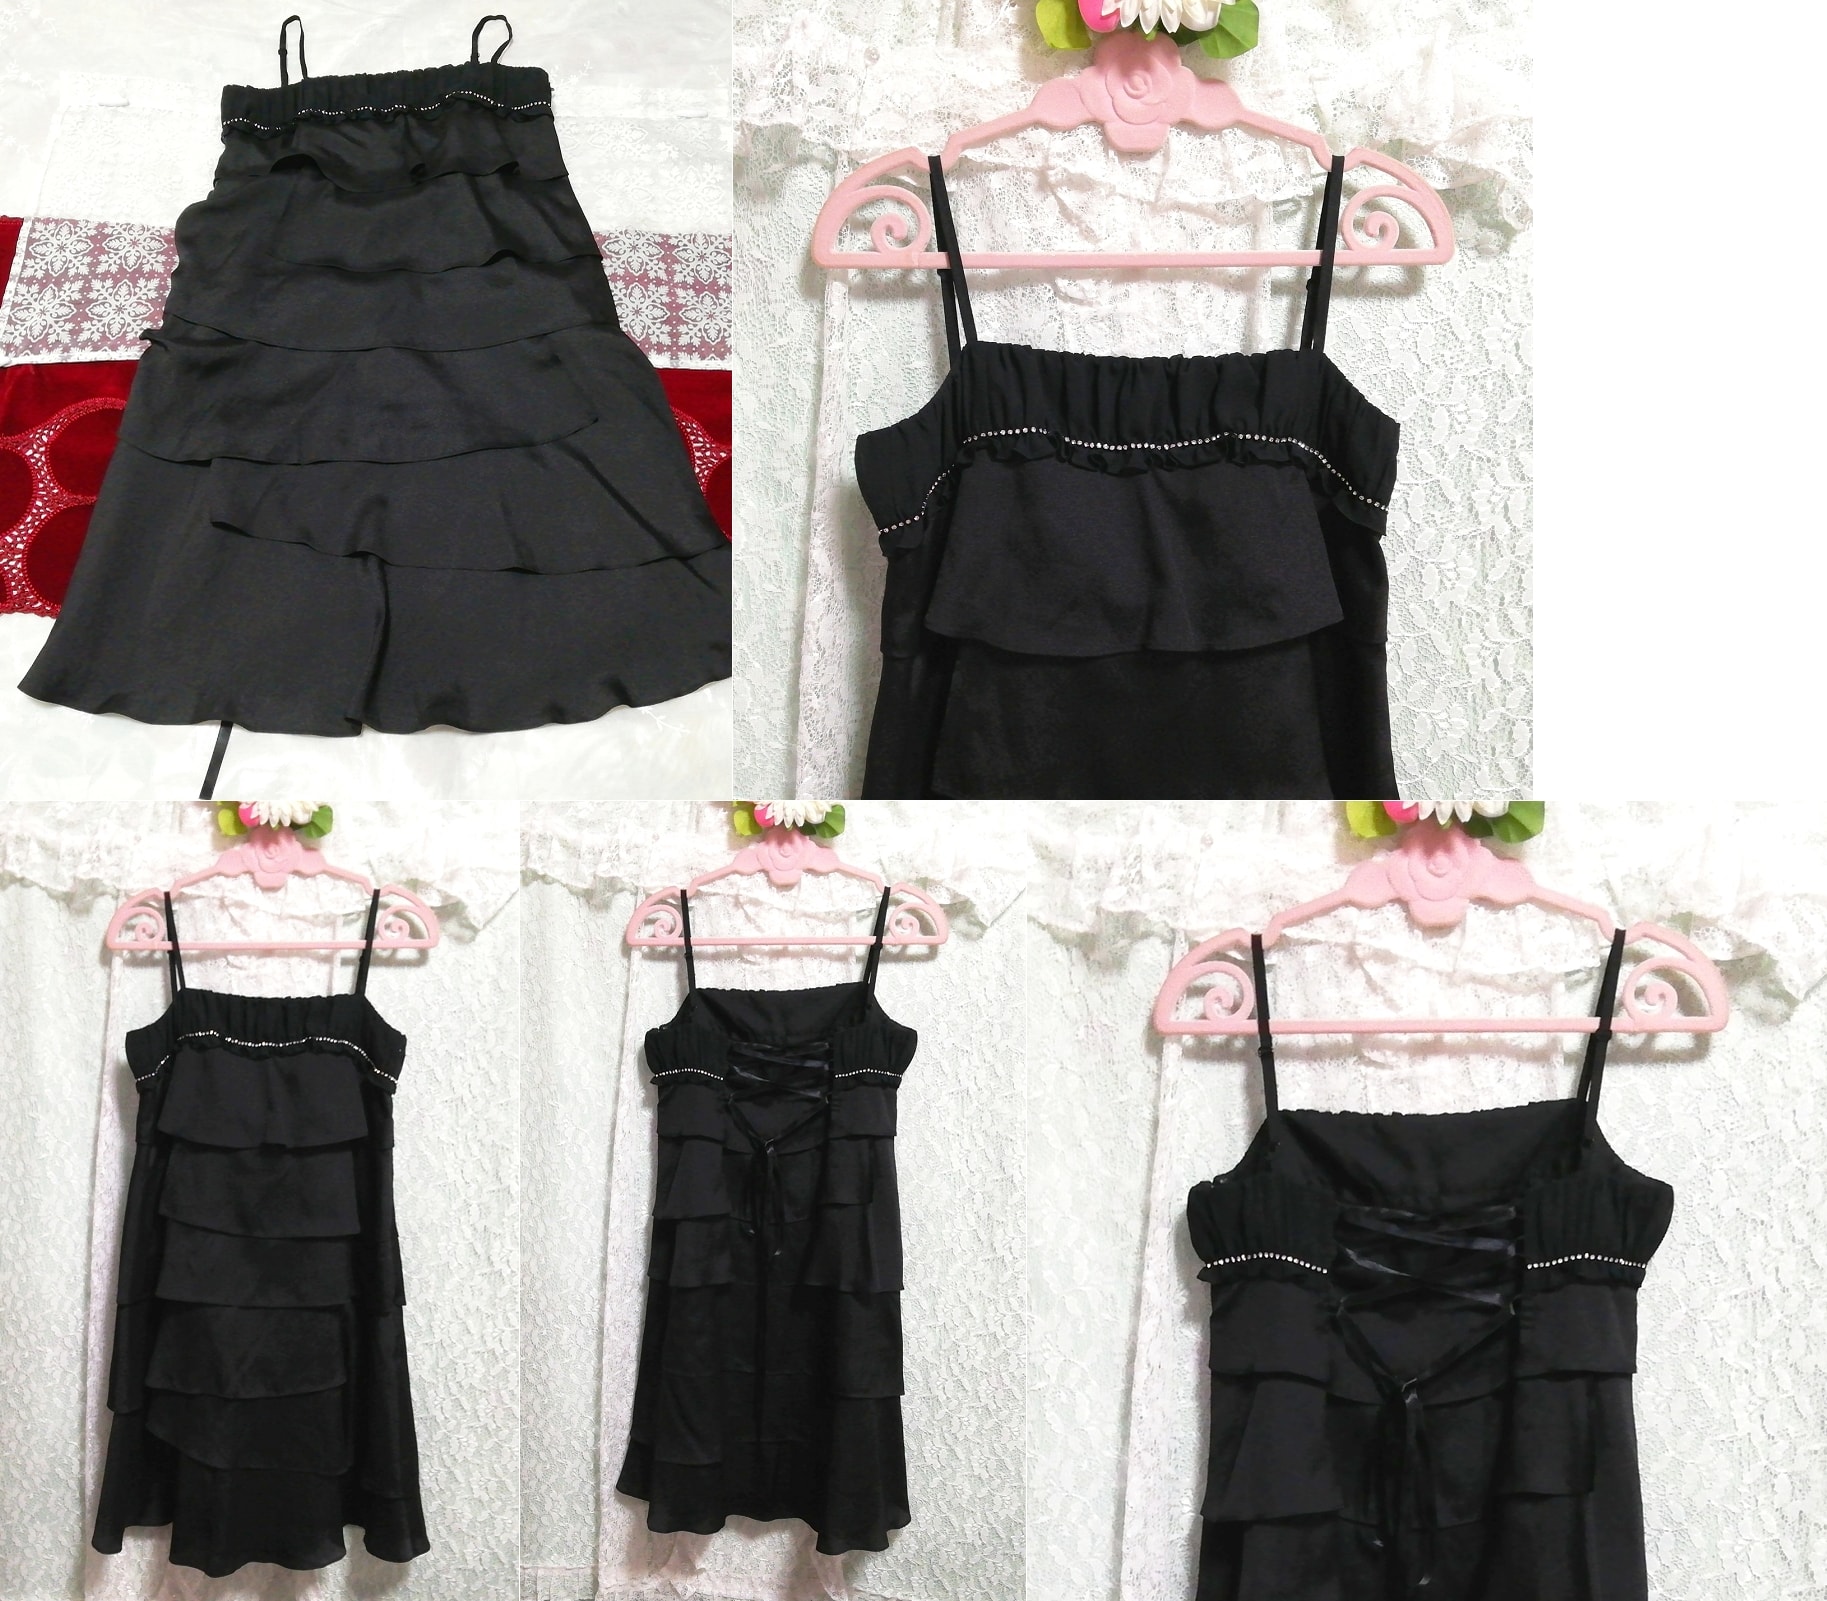 Black chiffon tiered ruffle negligee nightgown camisole babydoll dress, fashion, ladies' fashion, camisole